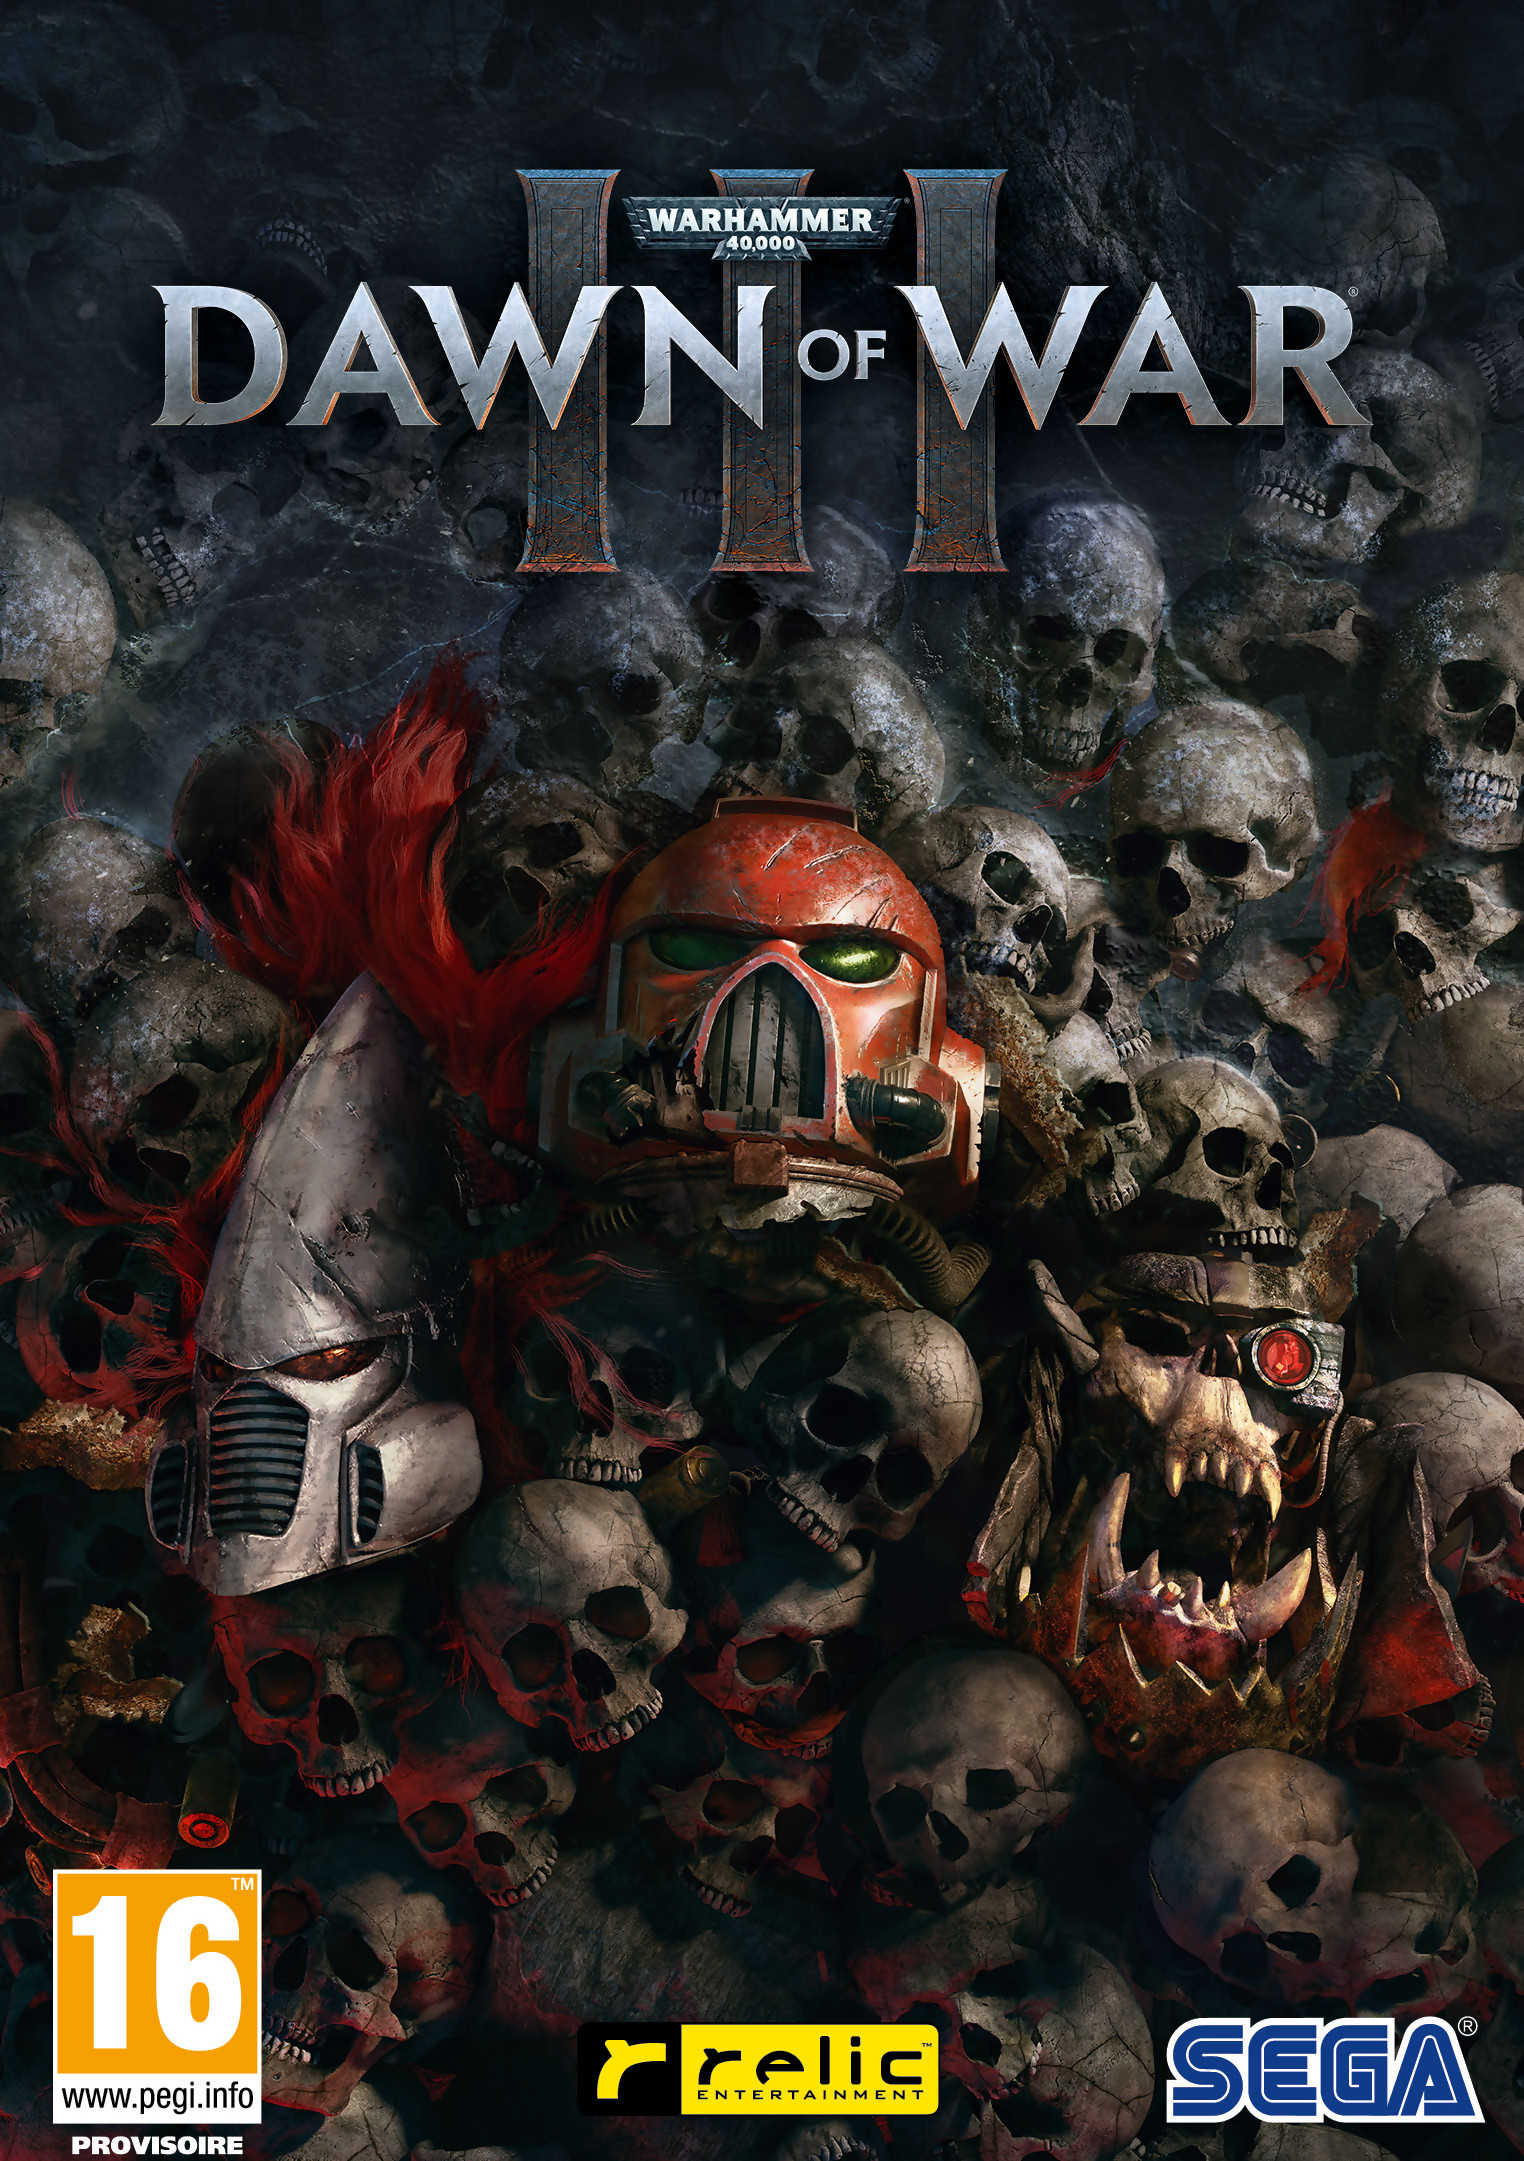 Warhammer 40k dawn of war 2 retribution system requirements